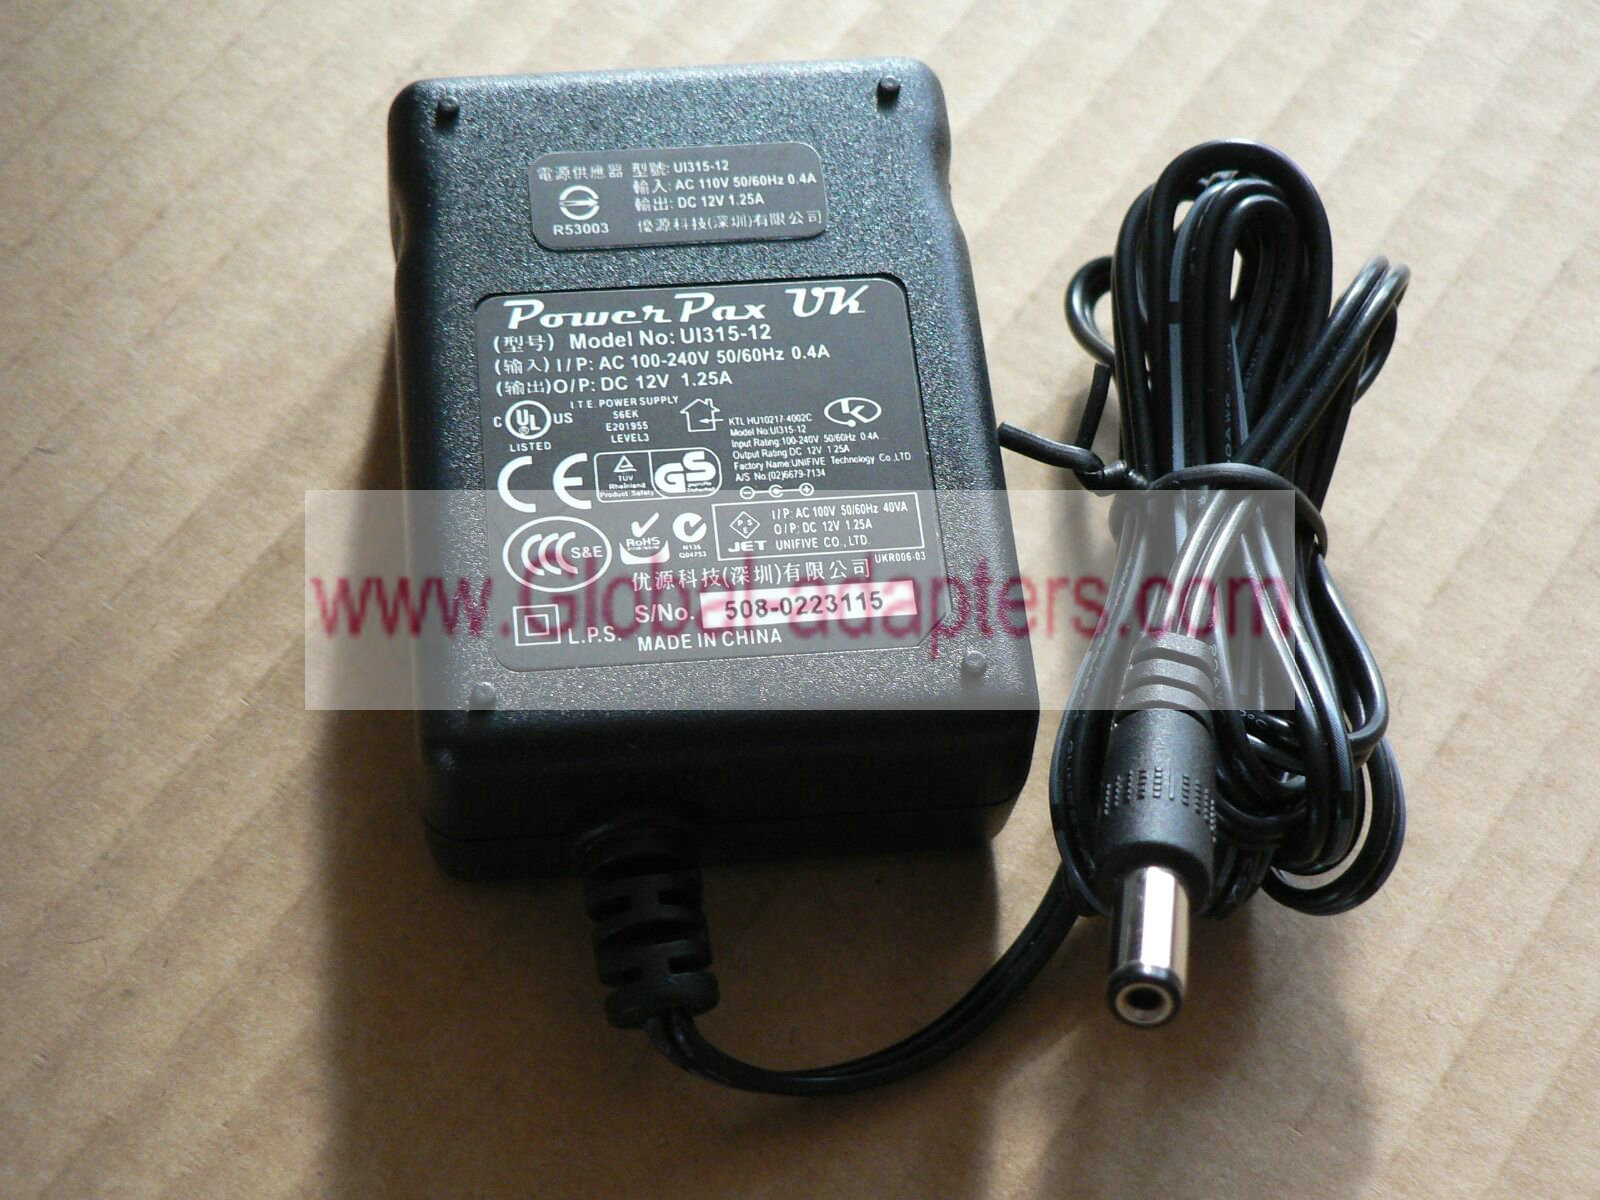 New PowerPax UK UI315-12 UK 12VDC 1.25A Regulated Desktop Power Supply